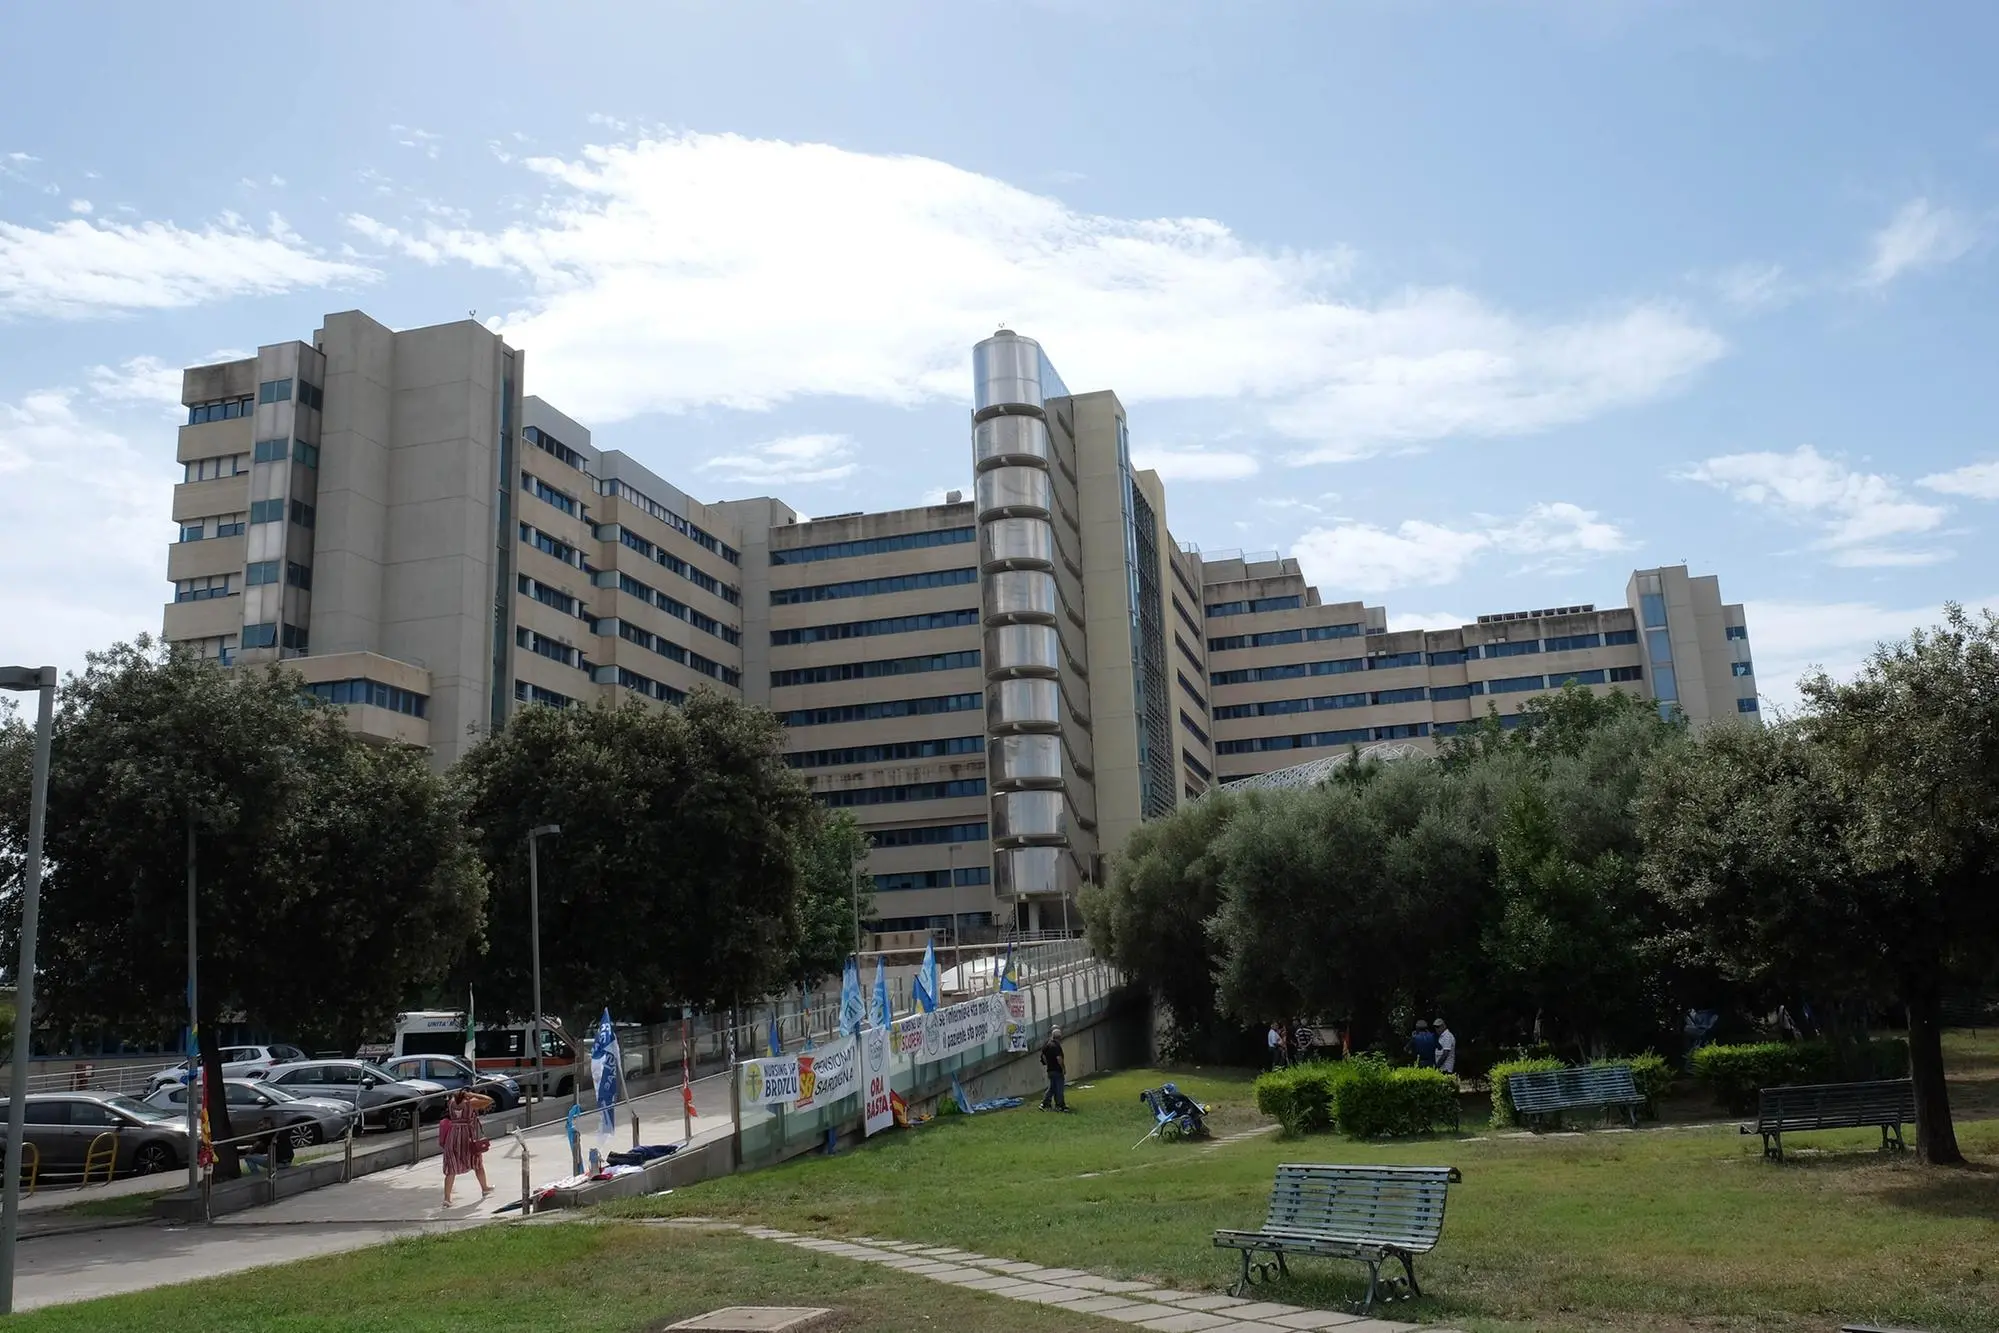 L'ospedale Brotzu a Cagliari (archivio L'Unione Sarda)